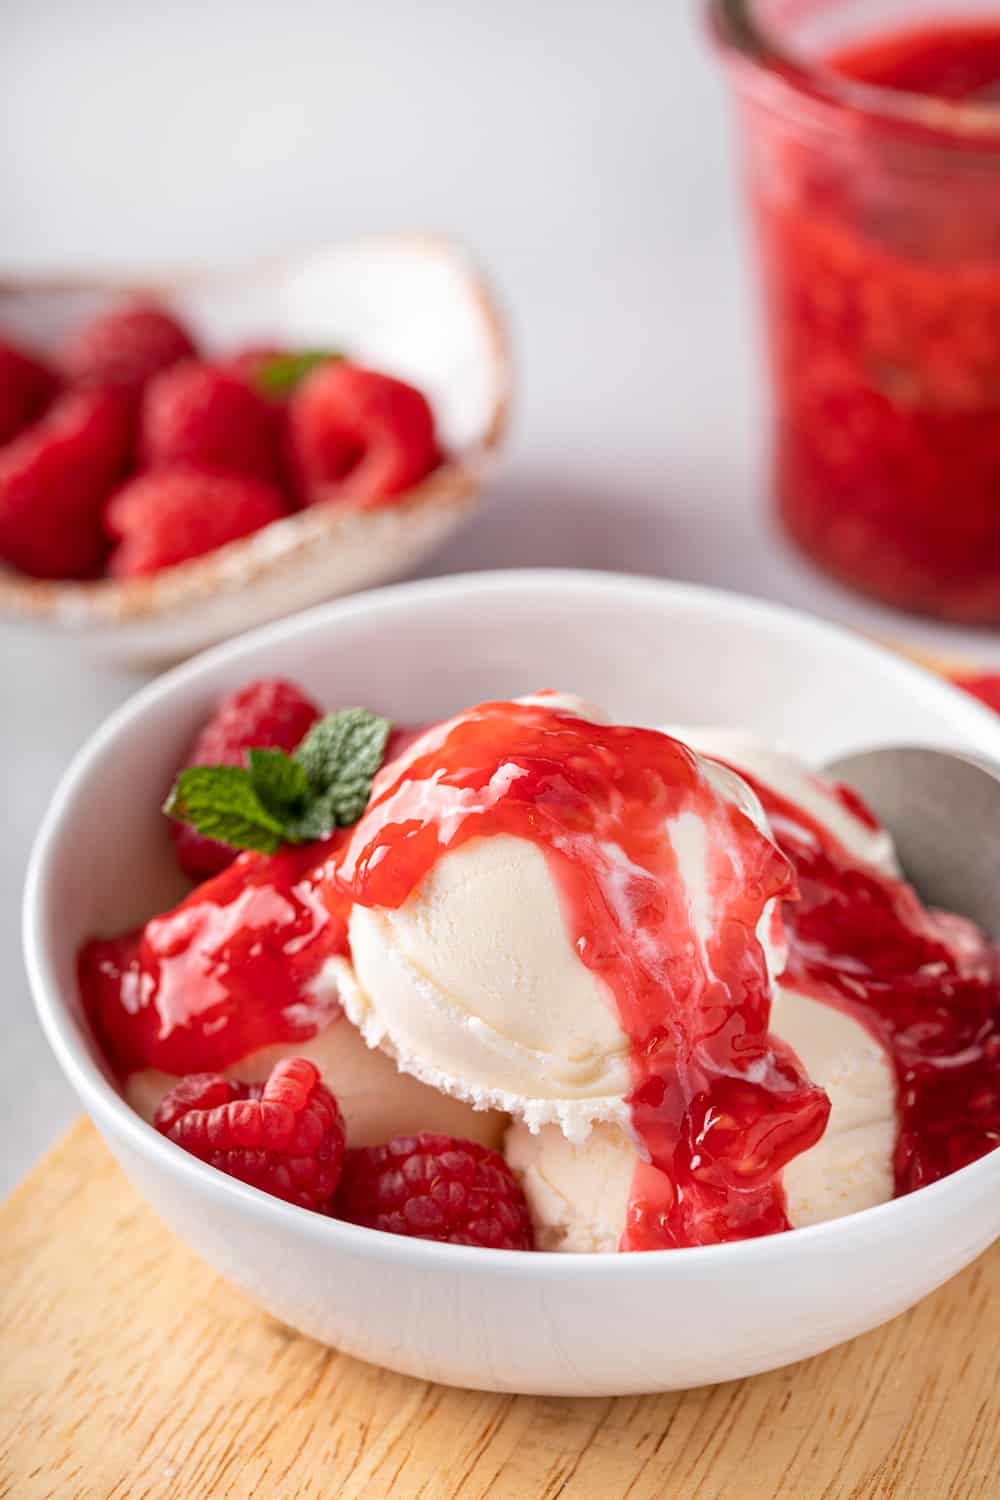 https://www.mybakingaddiction.com/wp-content/uploads/2022/02/raspberry-sauce-on-ice-cream.jpg